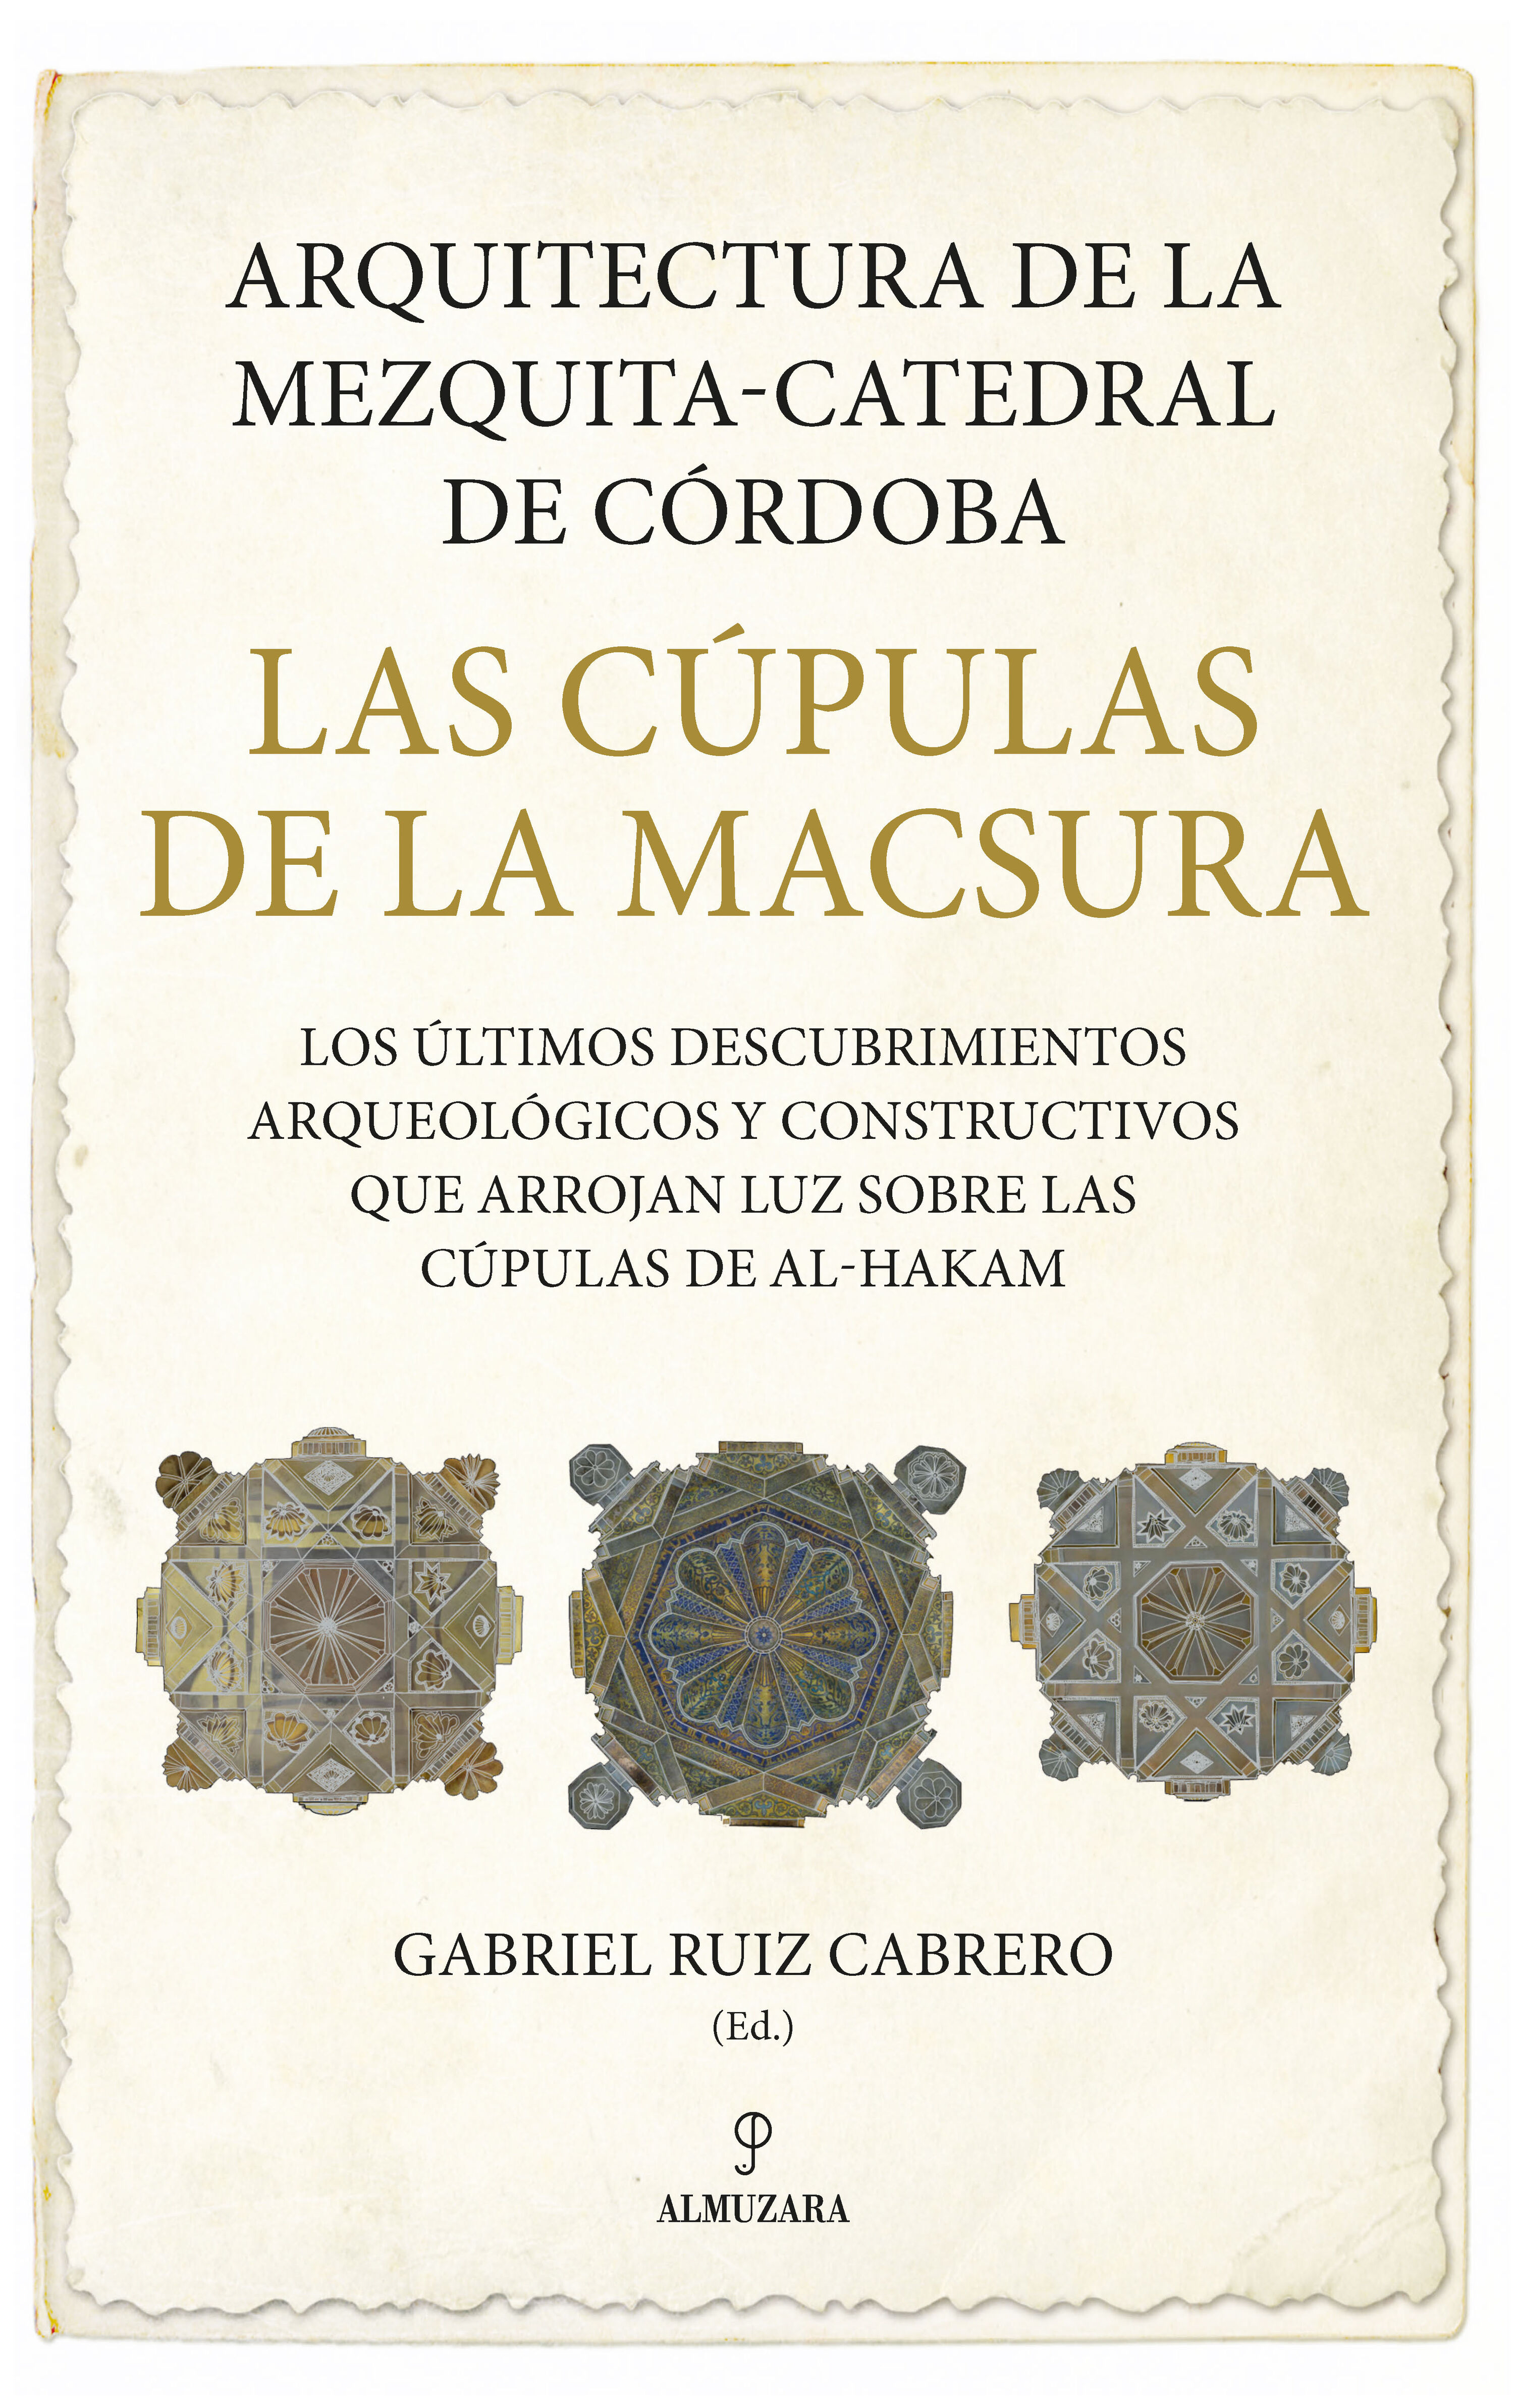 Arquitectura de la Mezquita-Catedral de Córdoba: las cúpulas de la Macsura